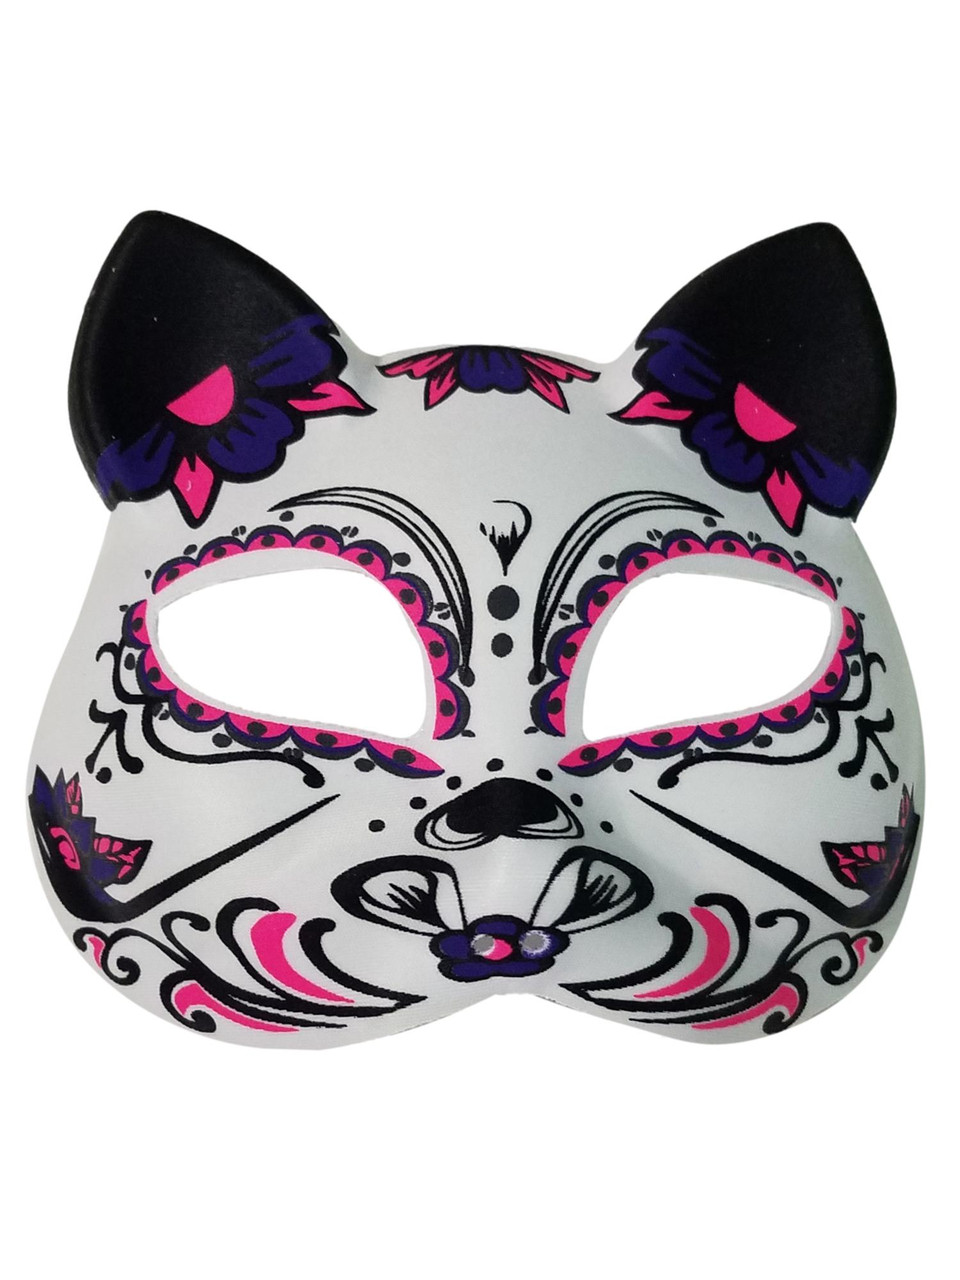 Halloween Cat Halloween Mask.Paper mache cat mask, cat costume.masquera  ORIGINAL